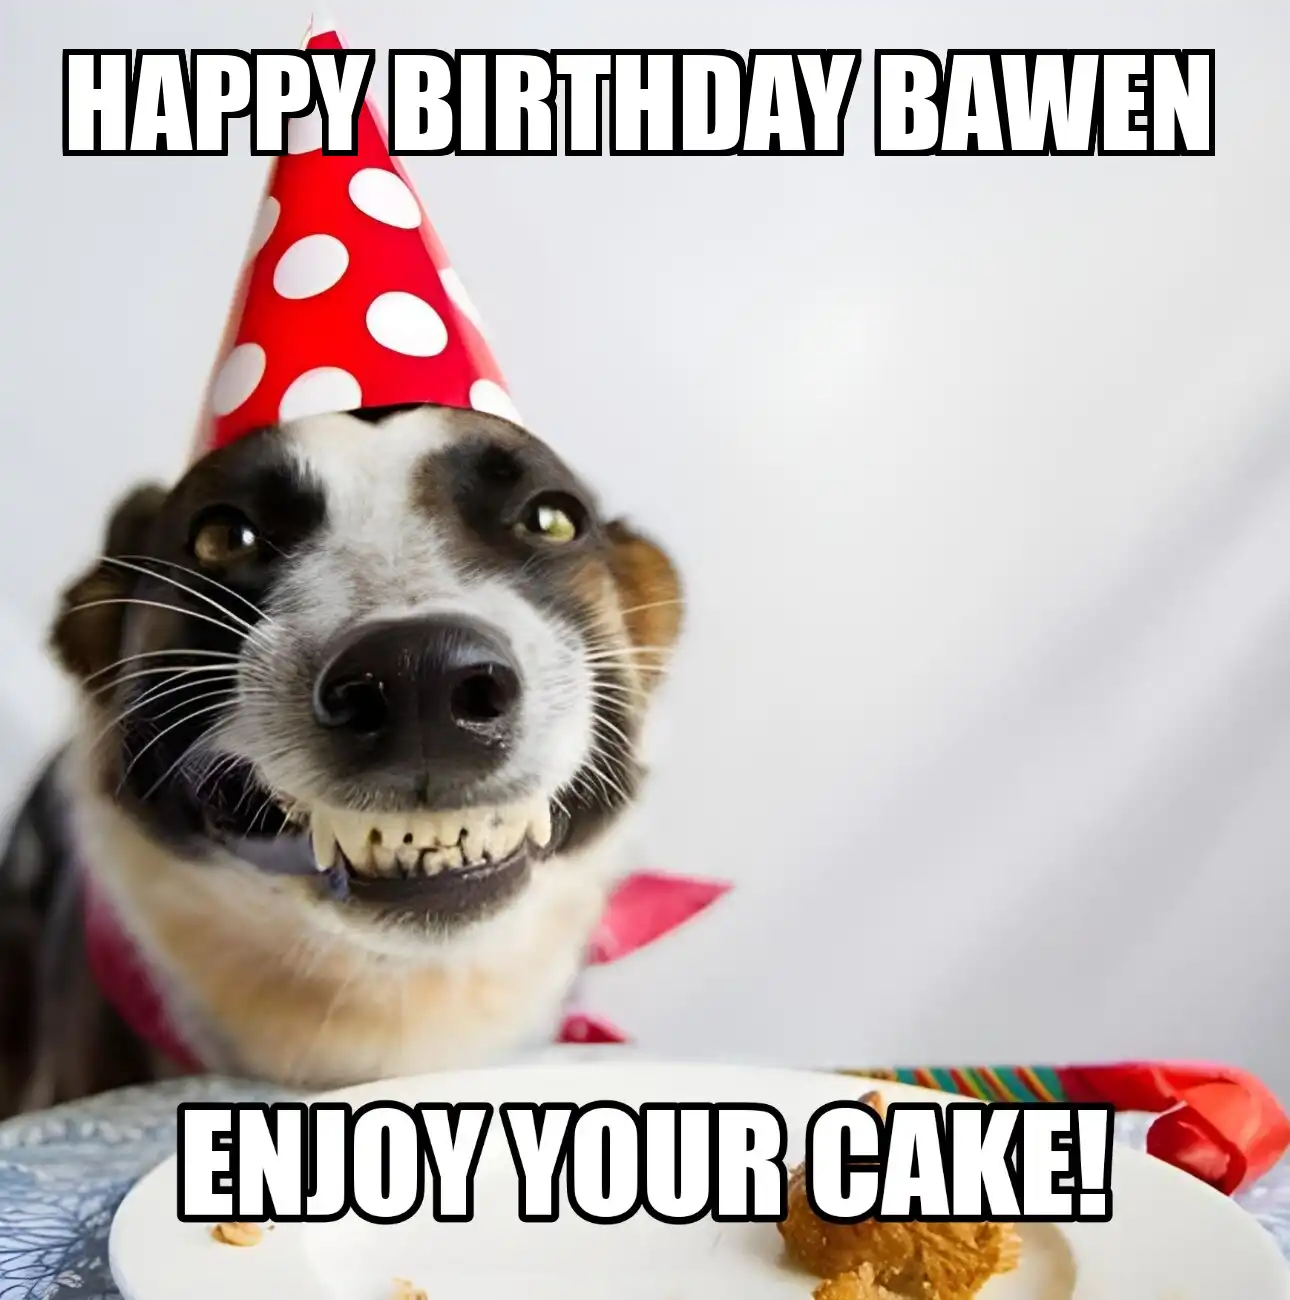 Happy Birthday Bawen Enjoy Your Cake Dog Meme